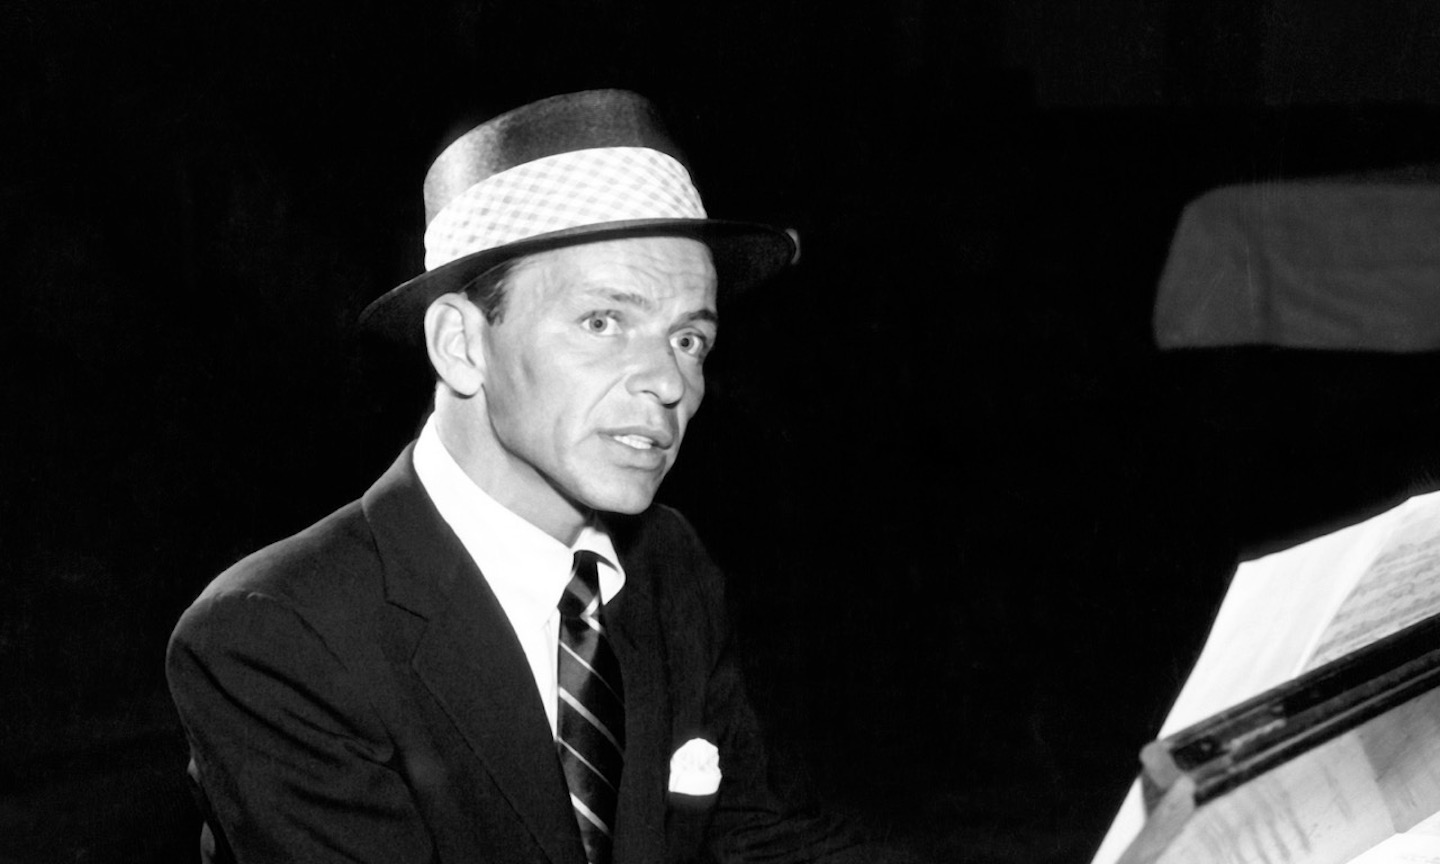 Frank Sinatra on Stage photo. Sinatra the world we